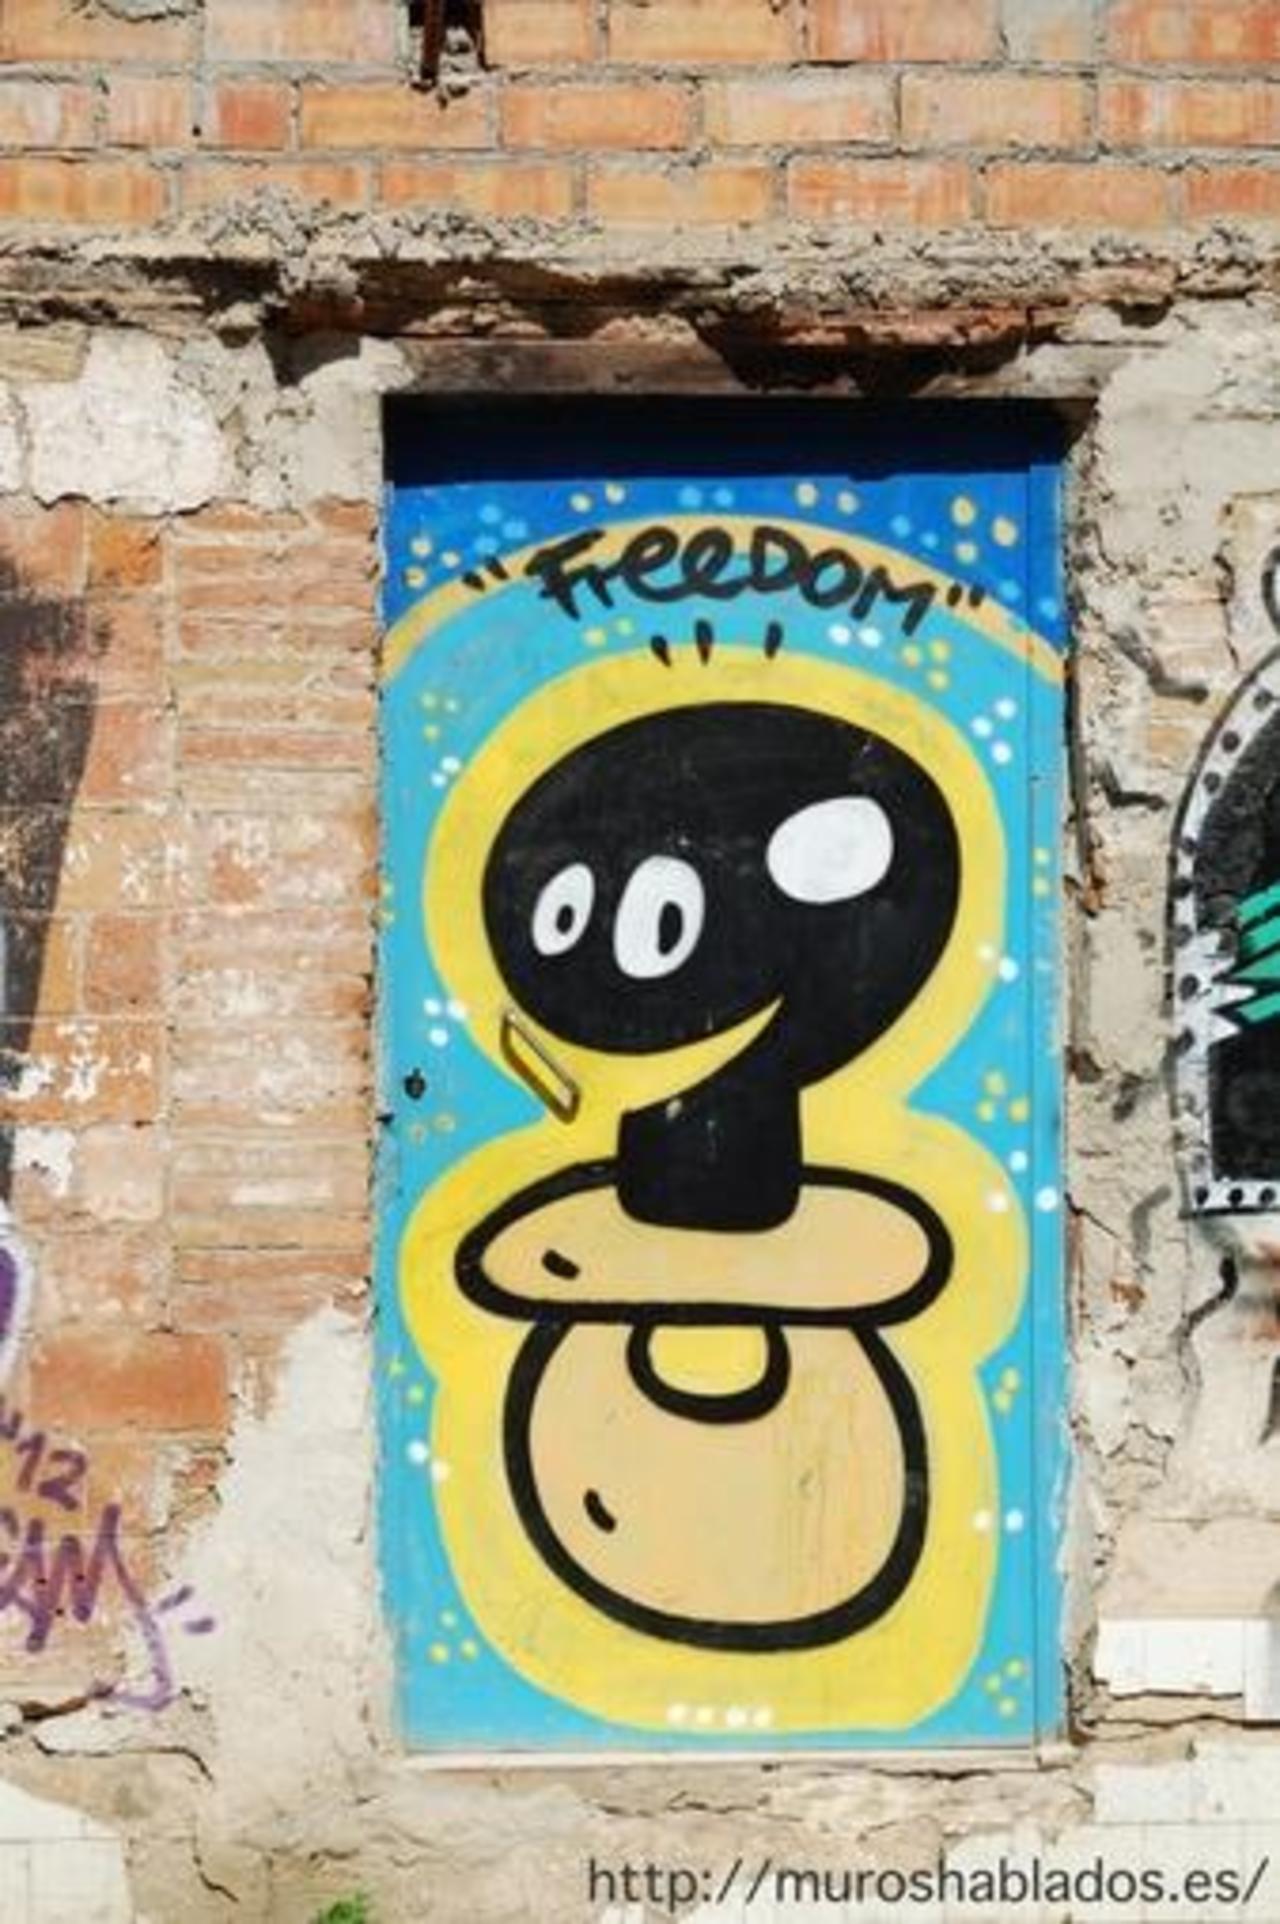 RT @muroshablados: FREEDOM http://ift.tt/1MTrgLj #streetart #graffiti #muroshablados http://t.co/MbC7w9OqX8